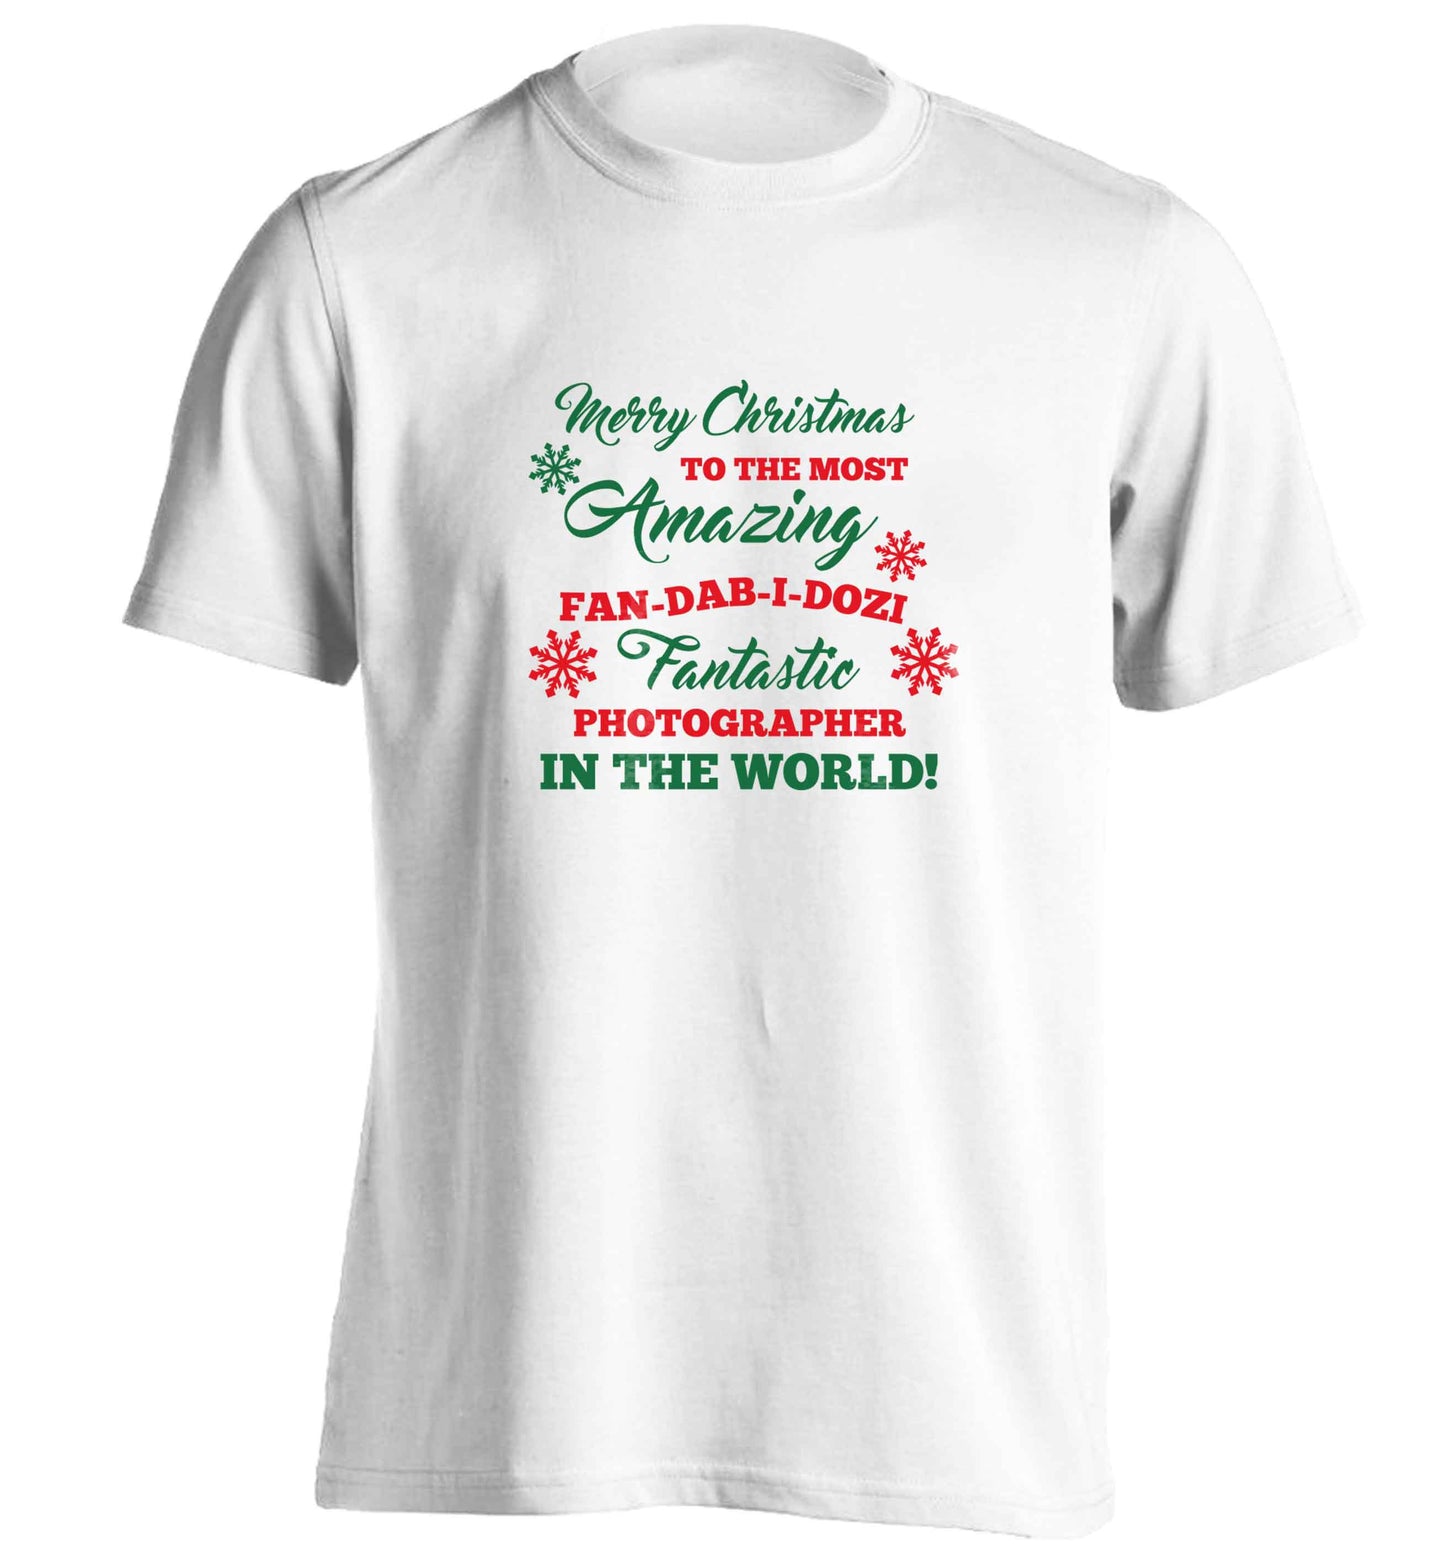 Merry Christmas to the most amazing fan-dab-i-dozi fantasic photographer in the world adults unisex white Tshirt 2XL